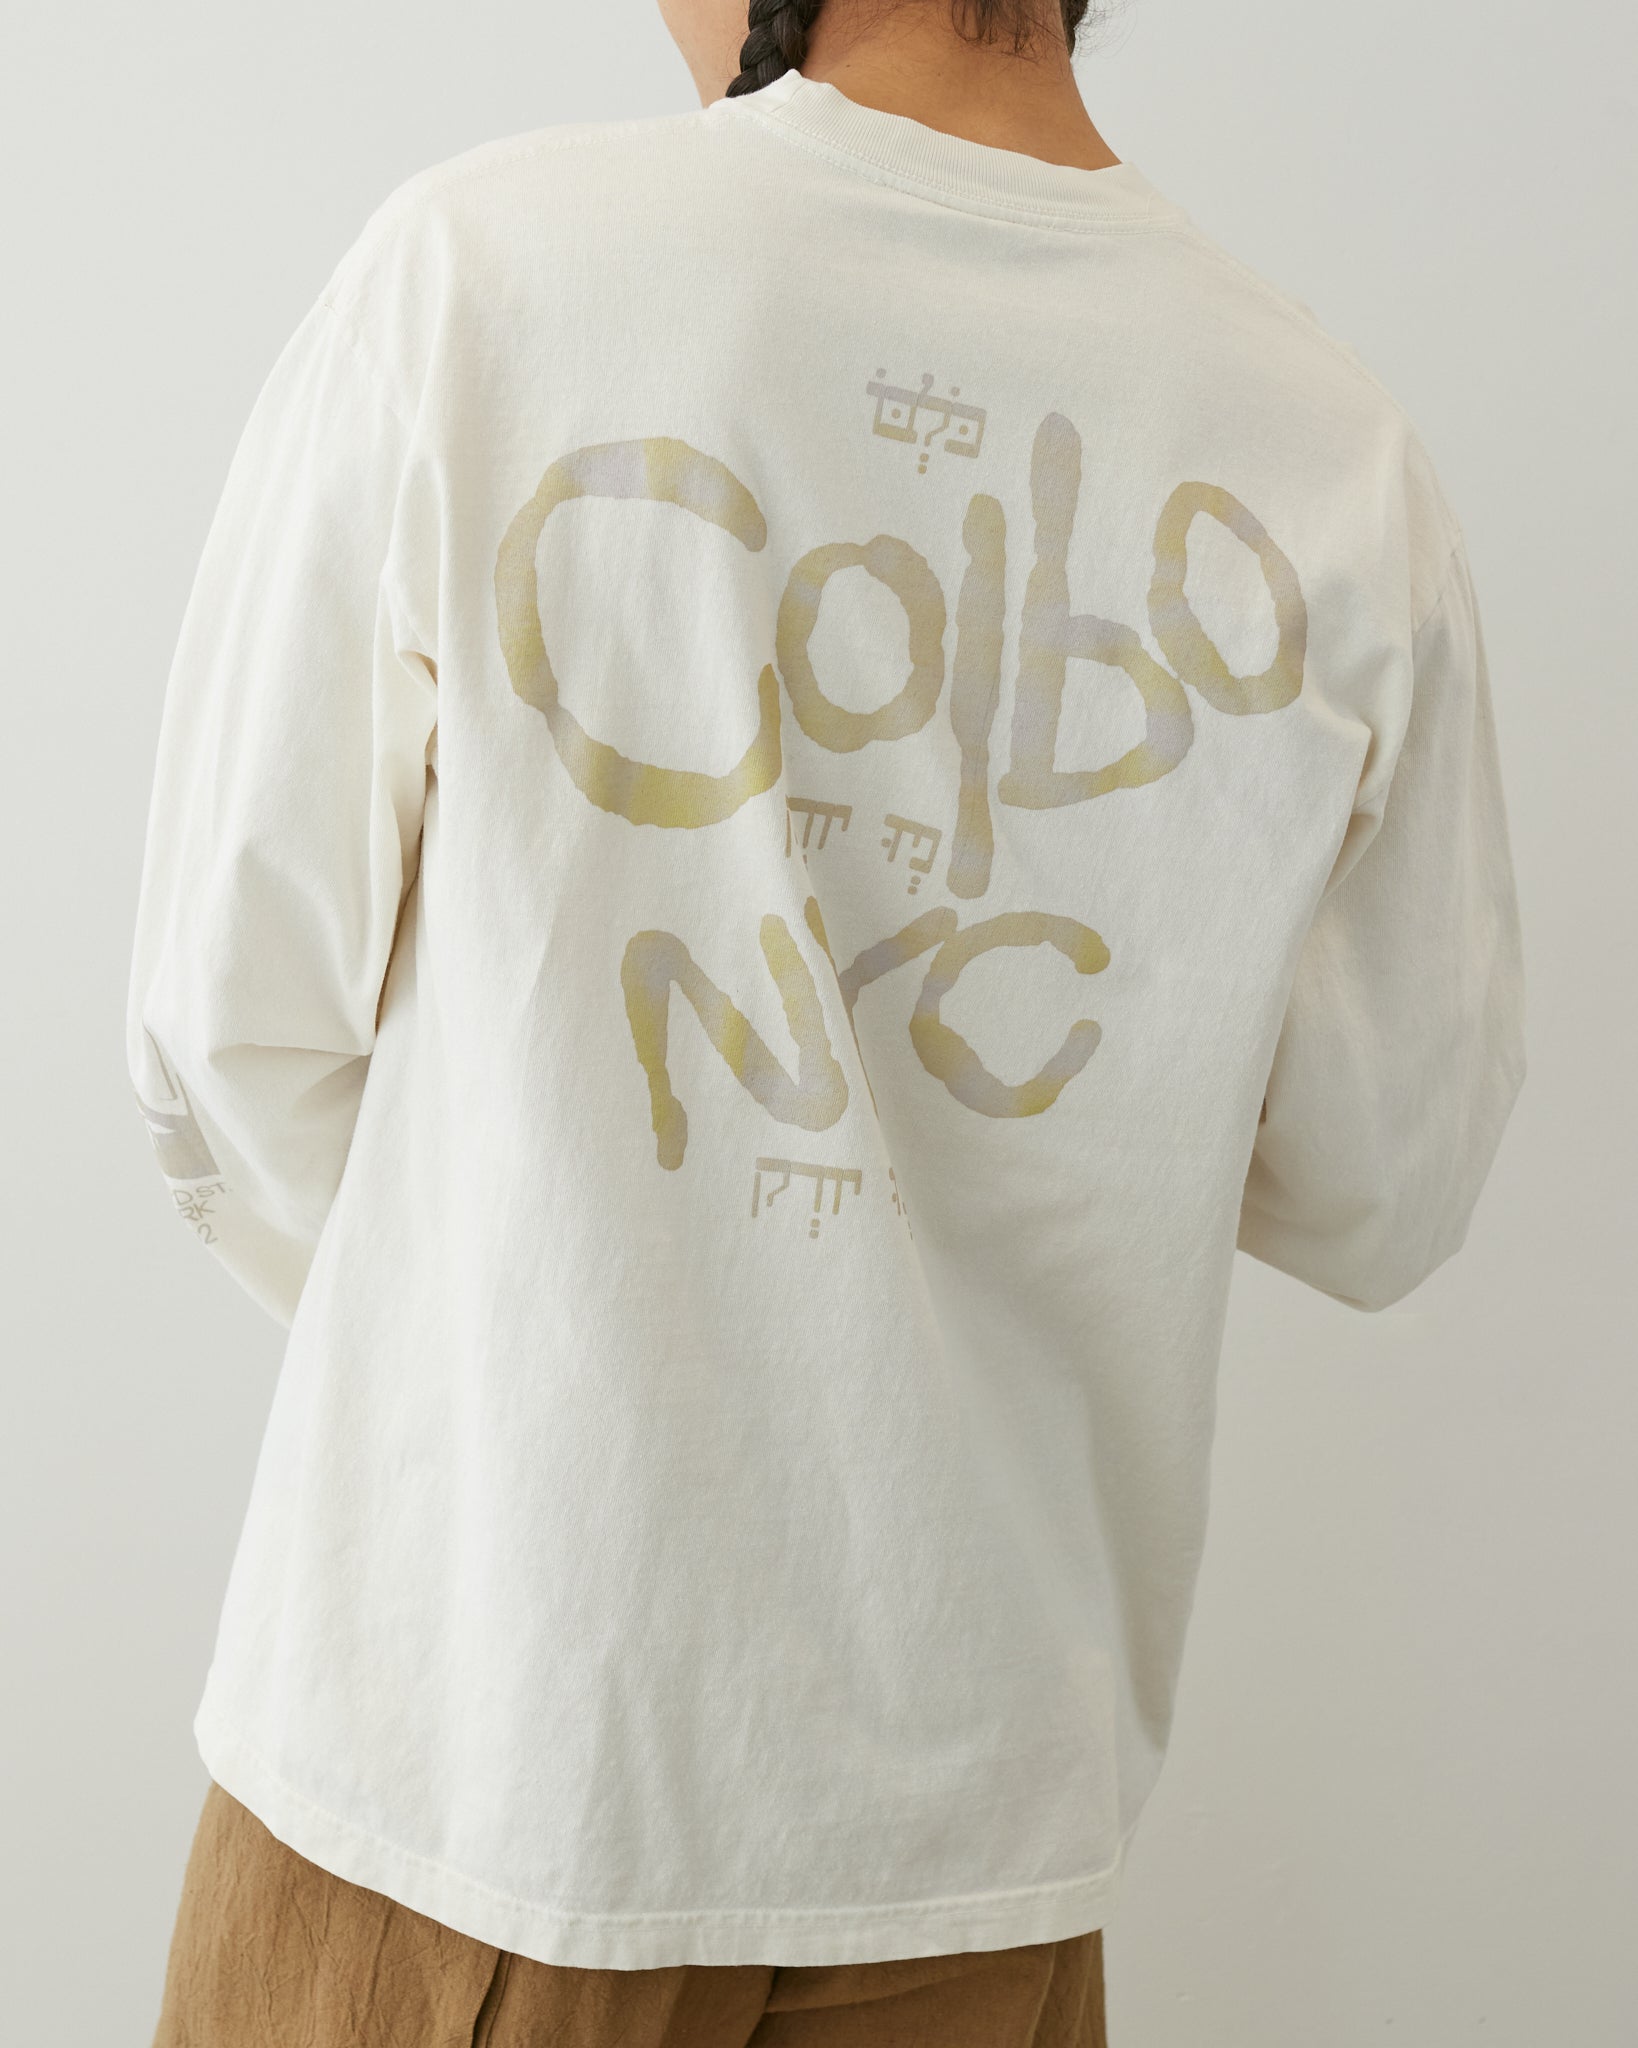 Colbo x Jonathan Katav L/S T Shirts